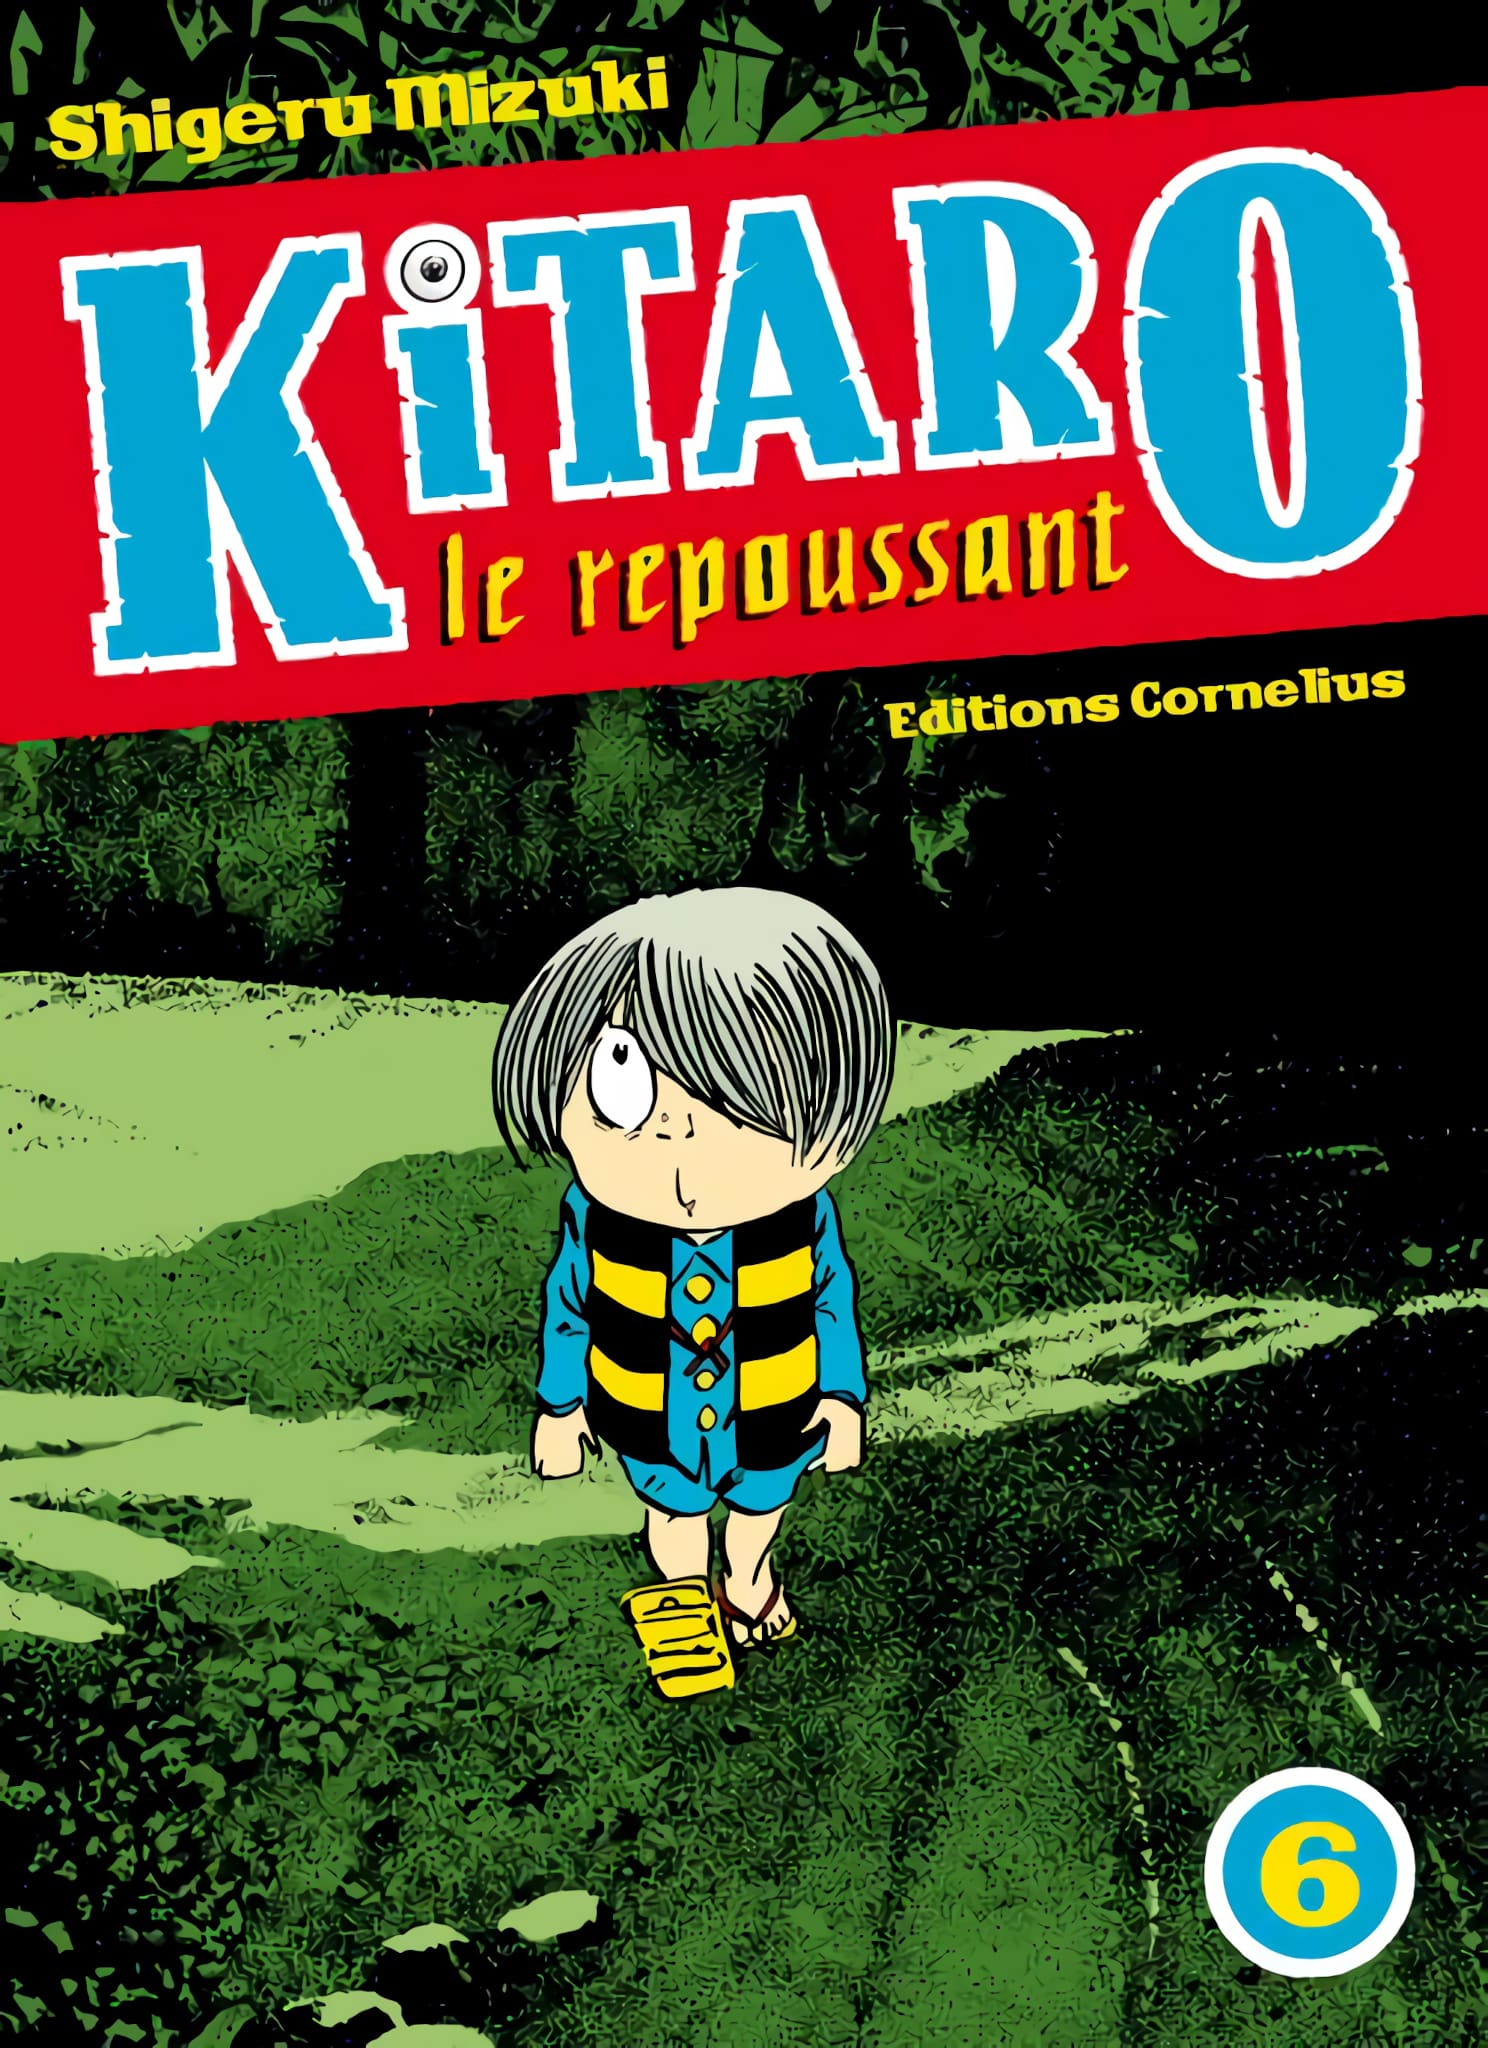 Tome 6 du manga Kitaro le repoussant